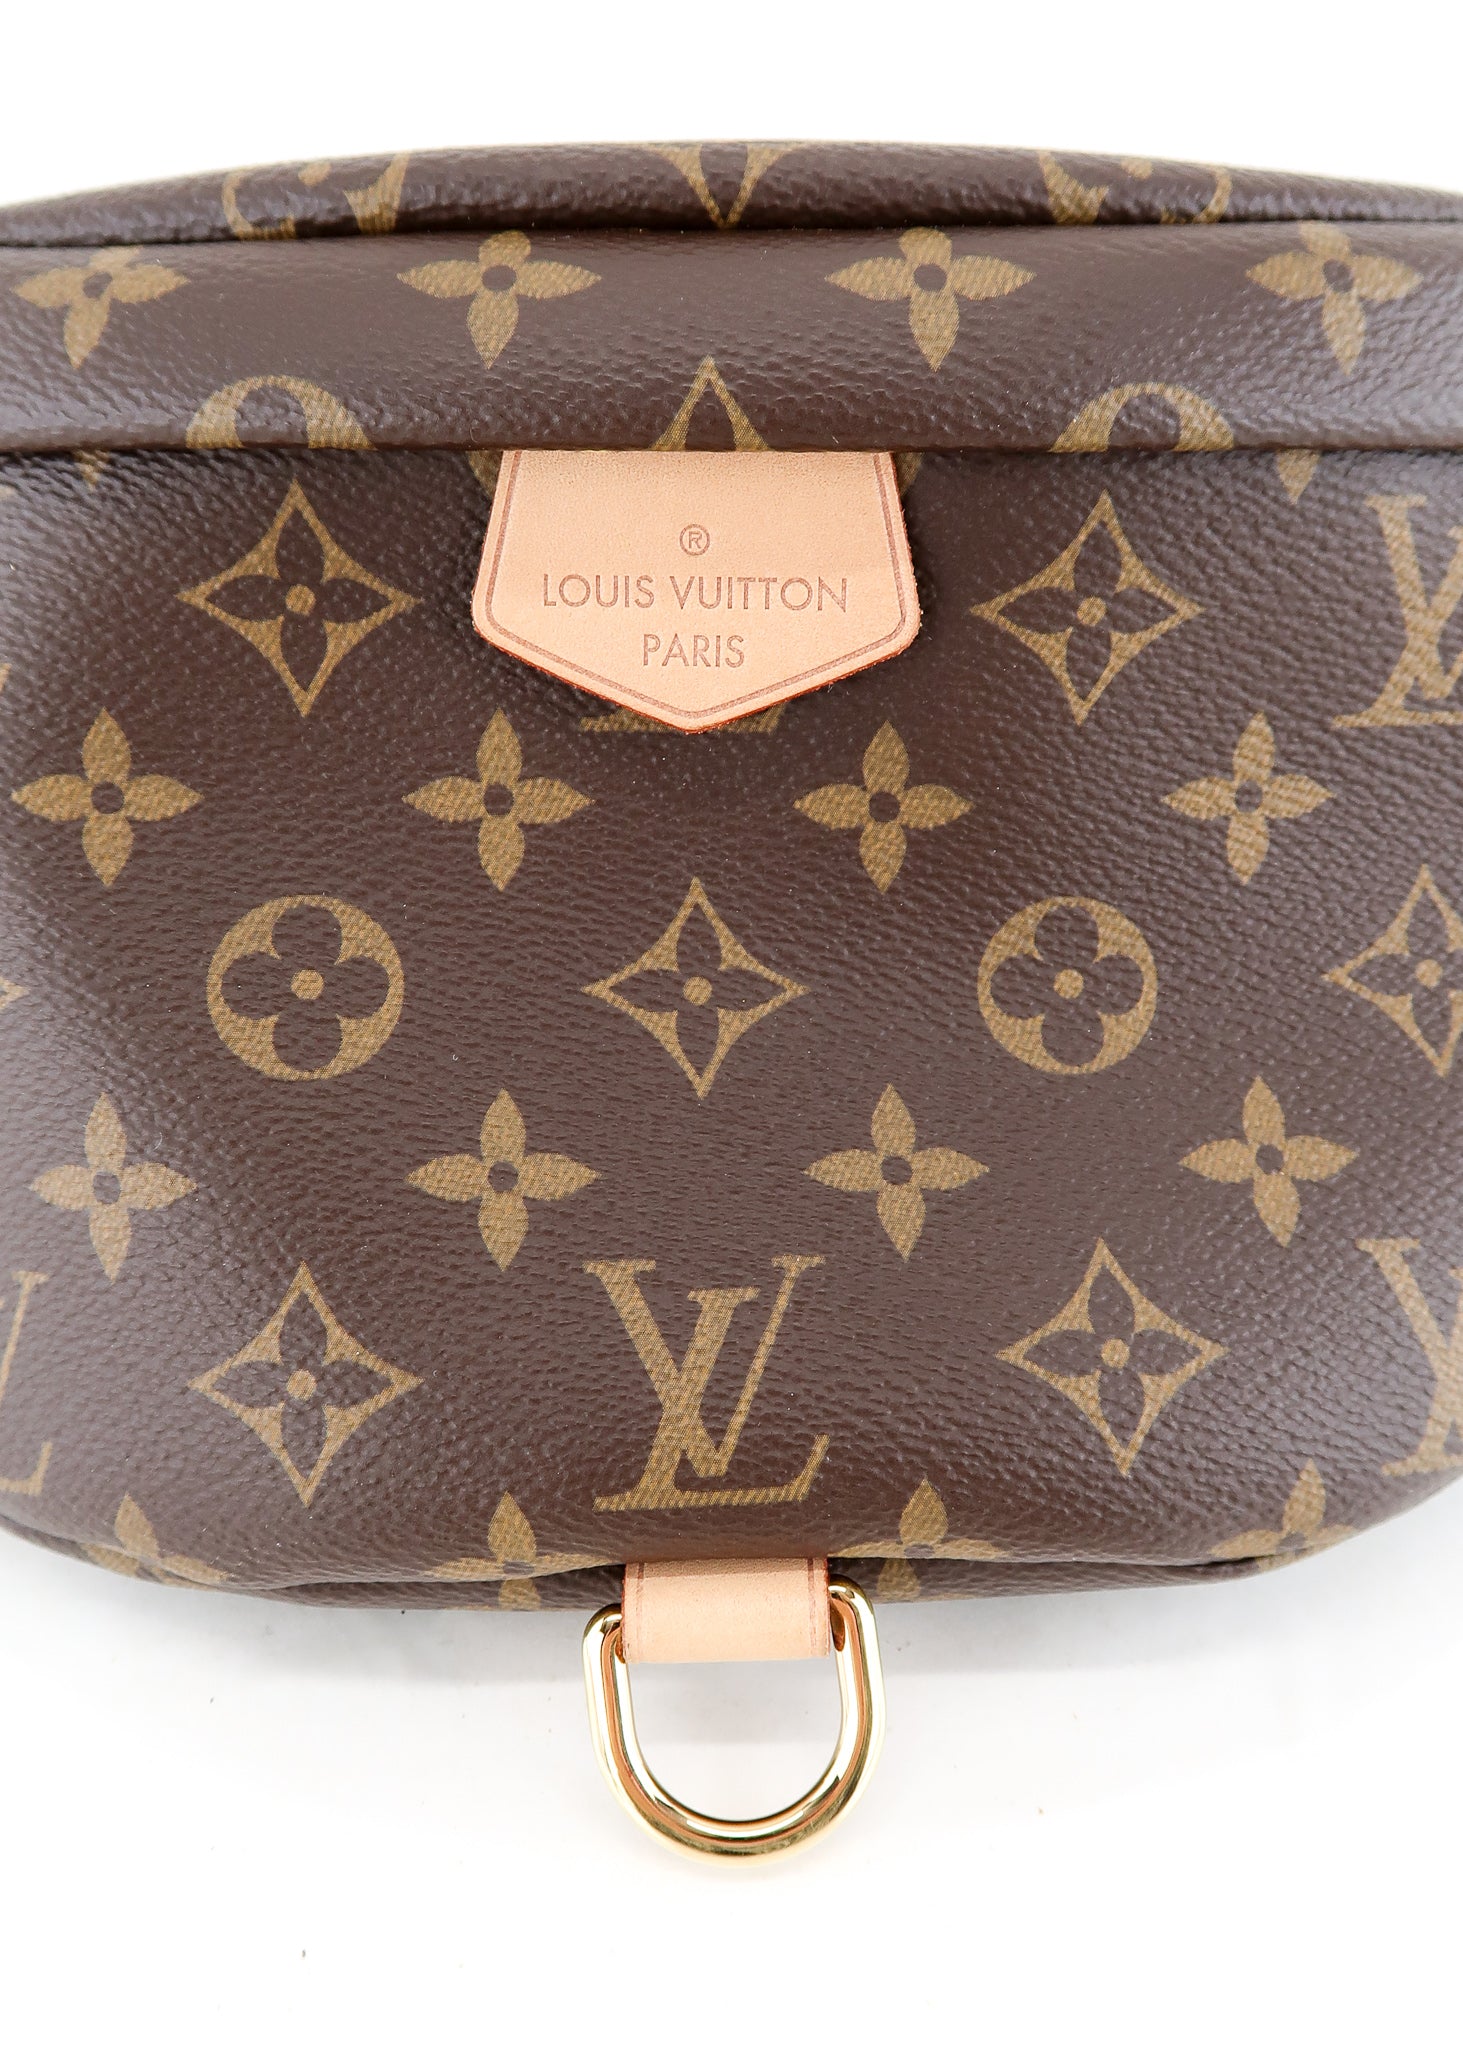 DISCONTINUED Louis Vuitton Monogram Bumbag CA2159 051723